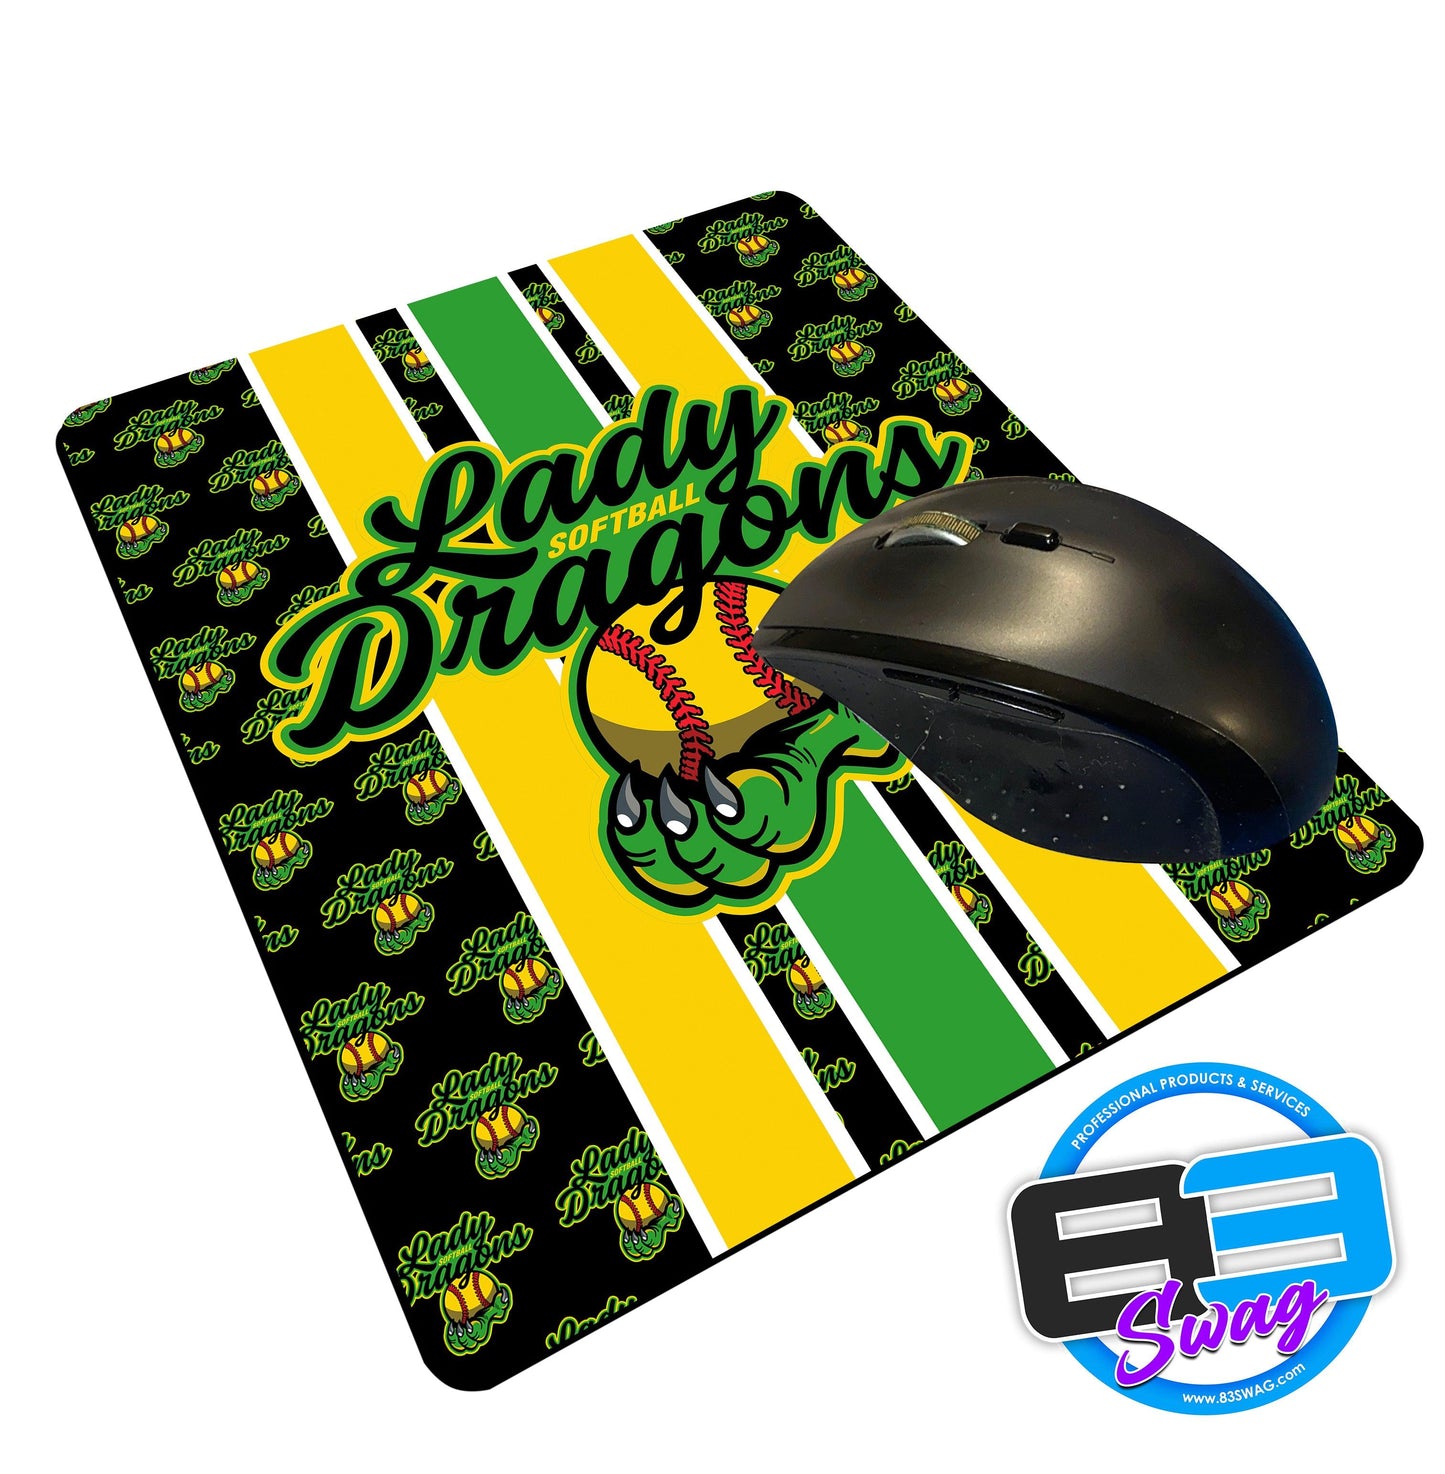 Mouse Pad - Lady Dragons Softball